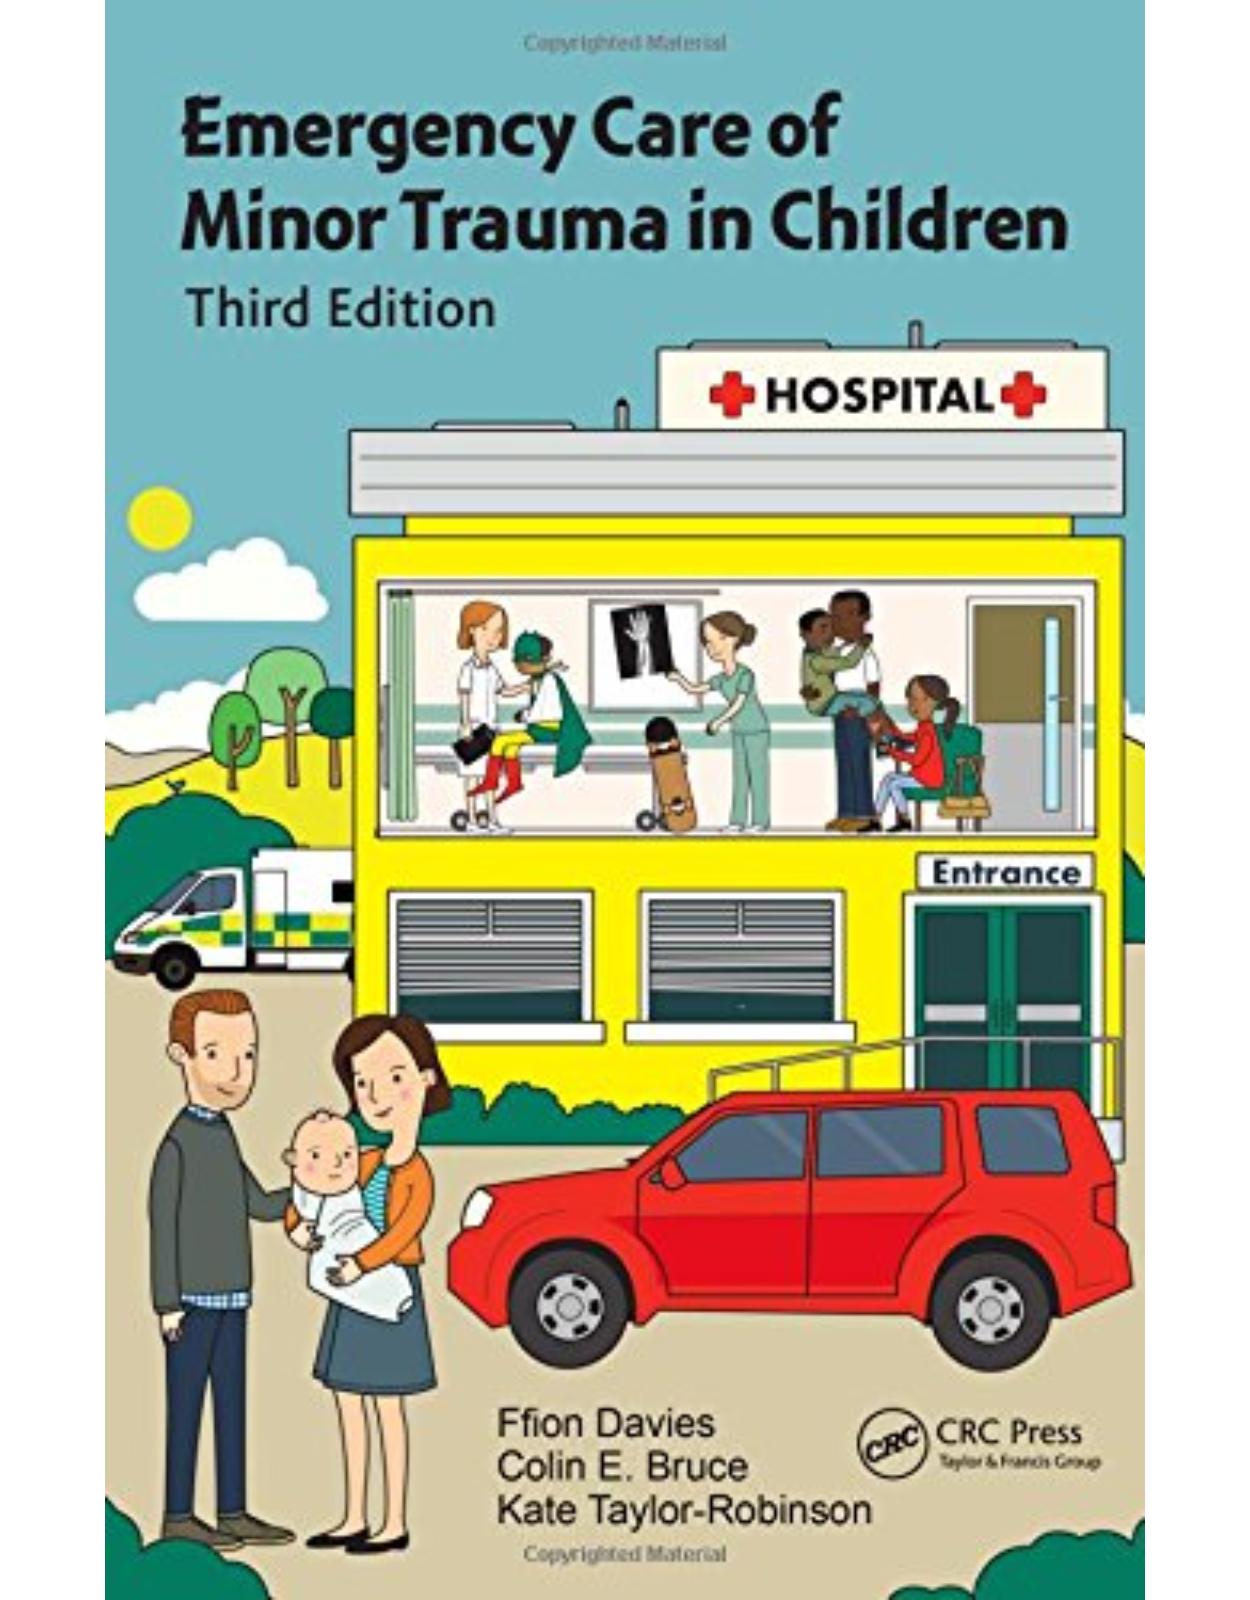 Emergency Care of Minor Trauma in Children, Third Edition